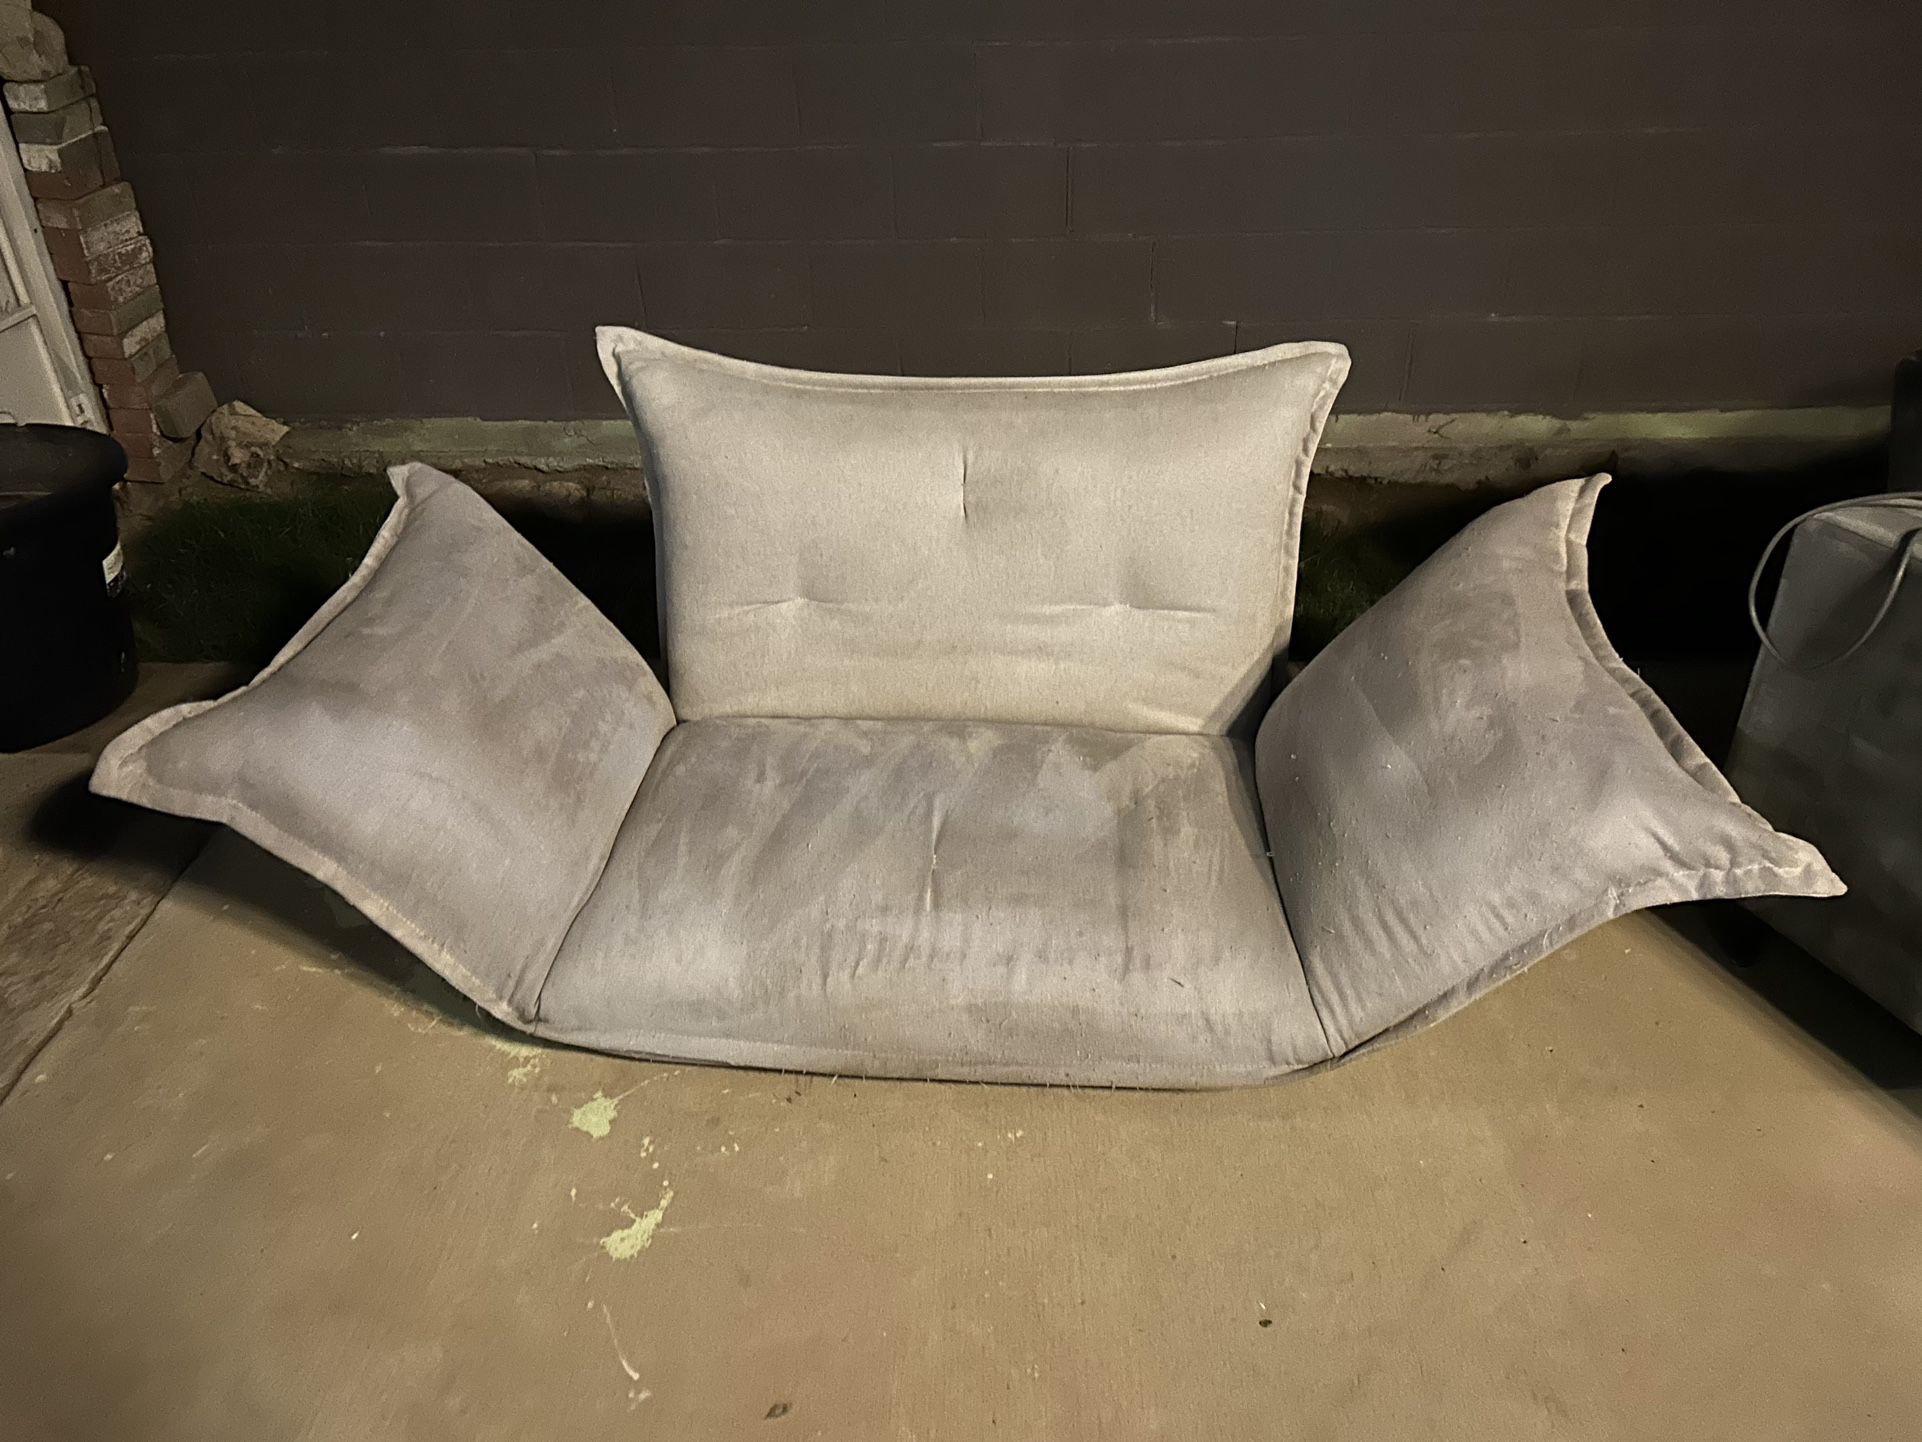 Convertible floor Couch/Bed- Grey 